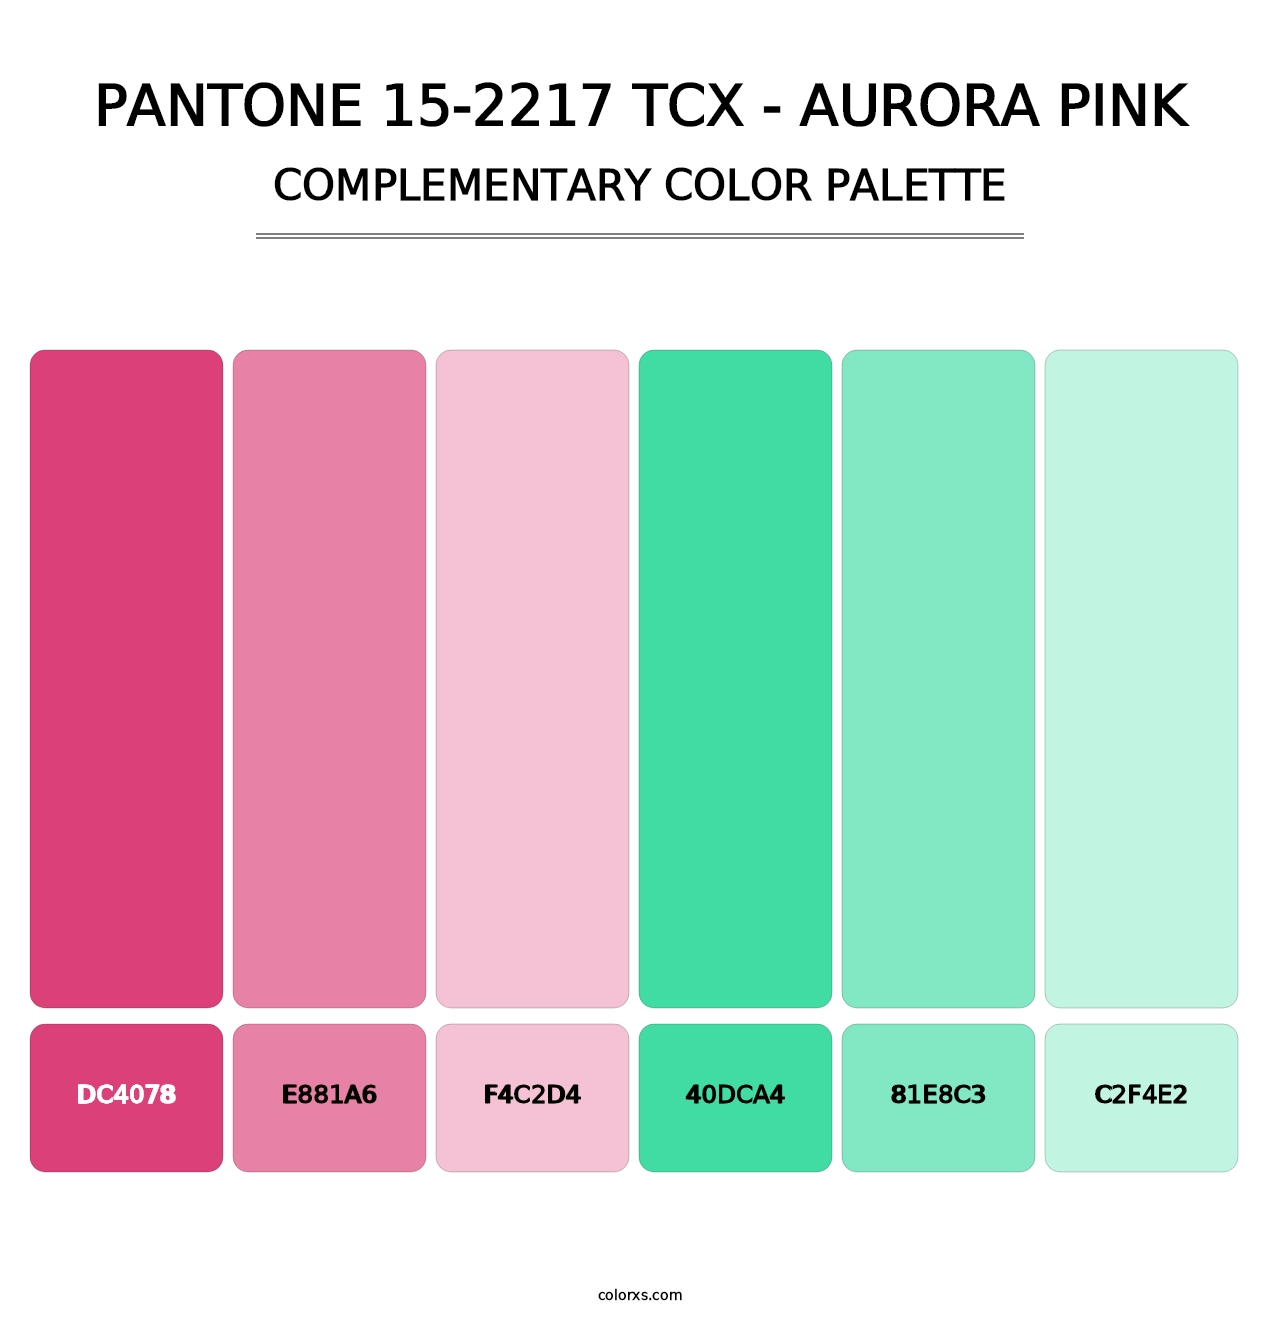 PANTONE 15-2217 TCX - Aurora Pink - Complementary Color Palette